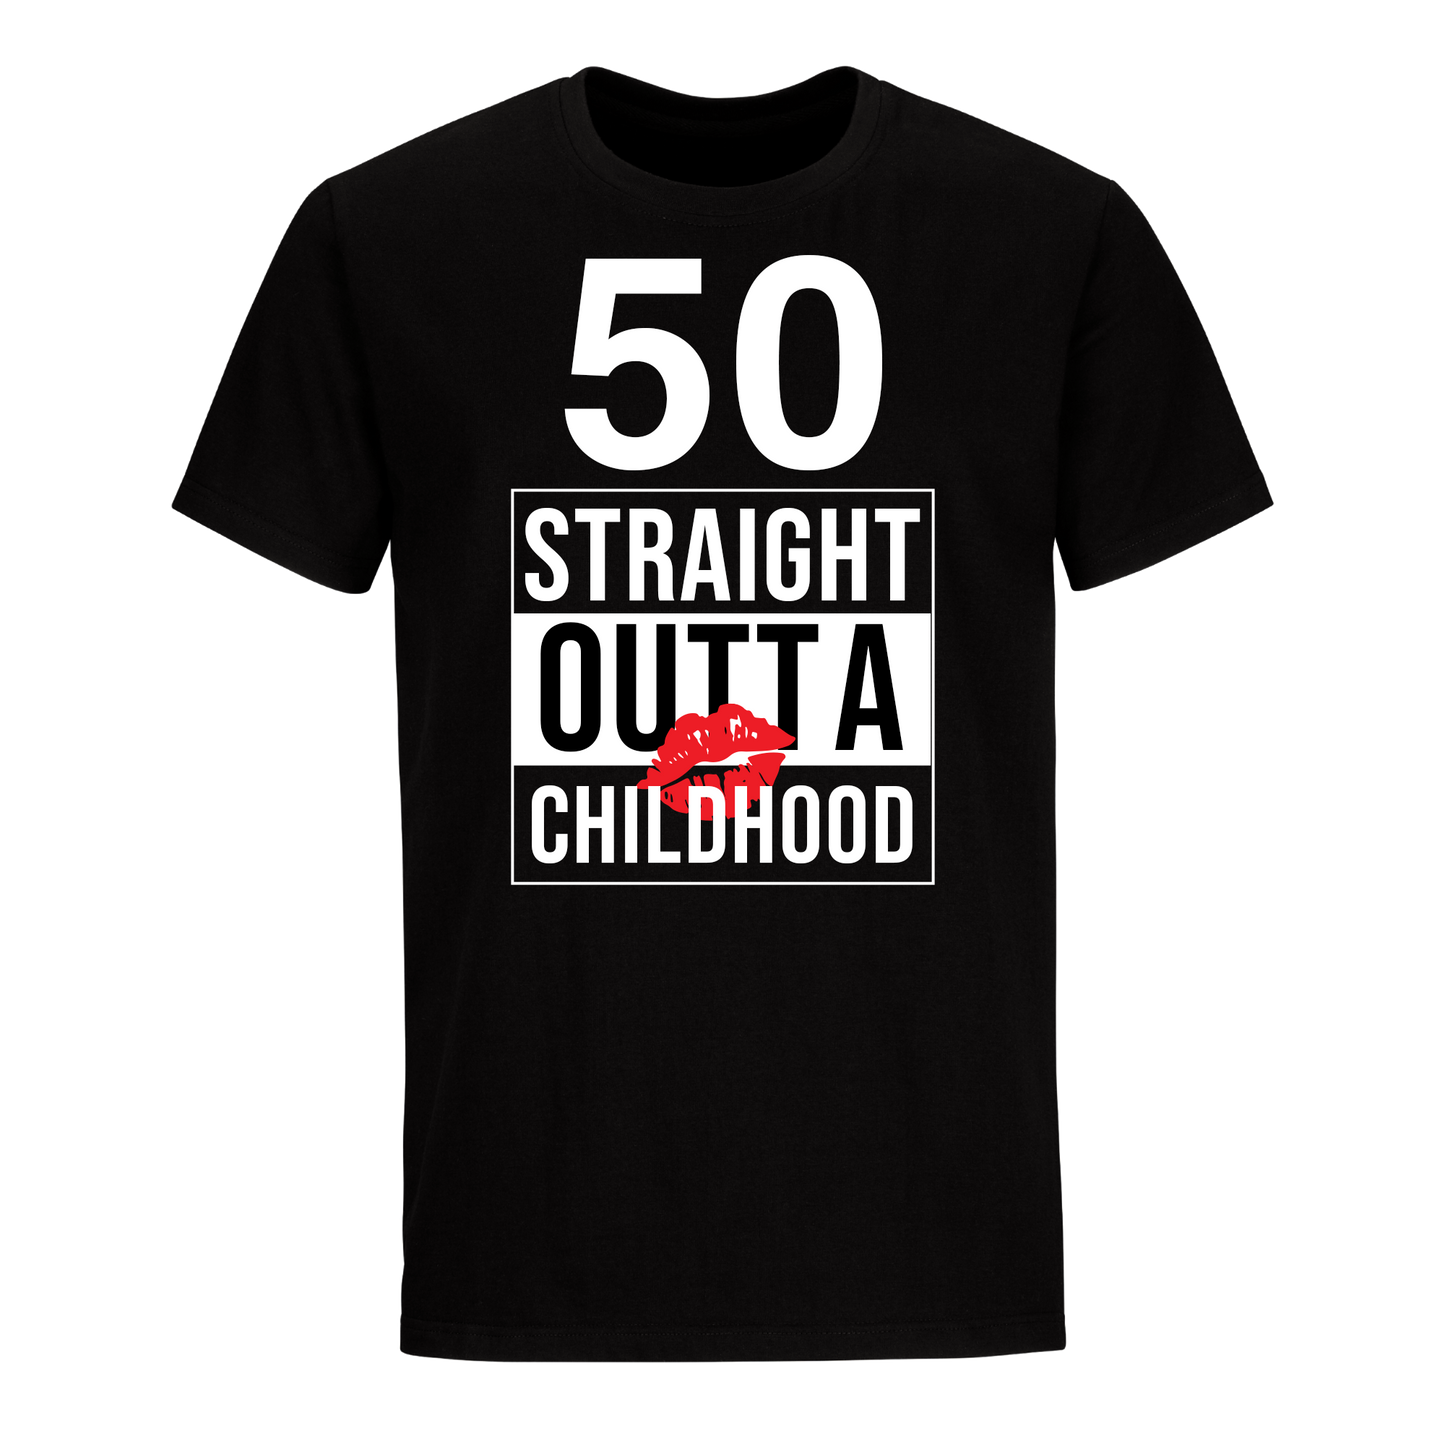 50 STRAIGHT OUTTA CHILDHOOD UNISEX SHIRT